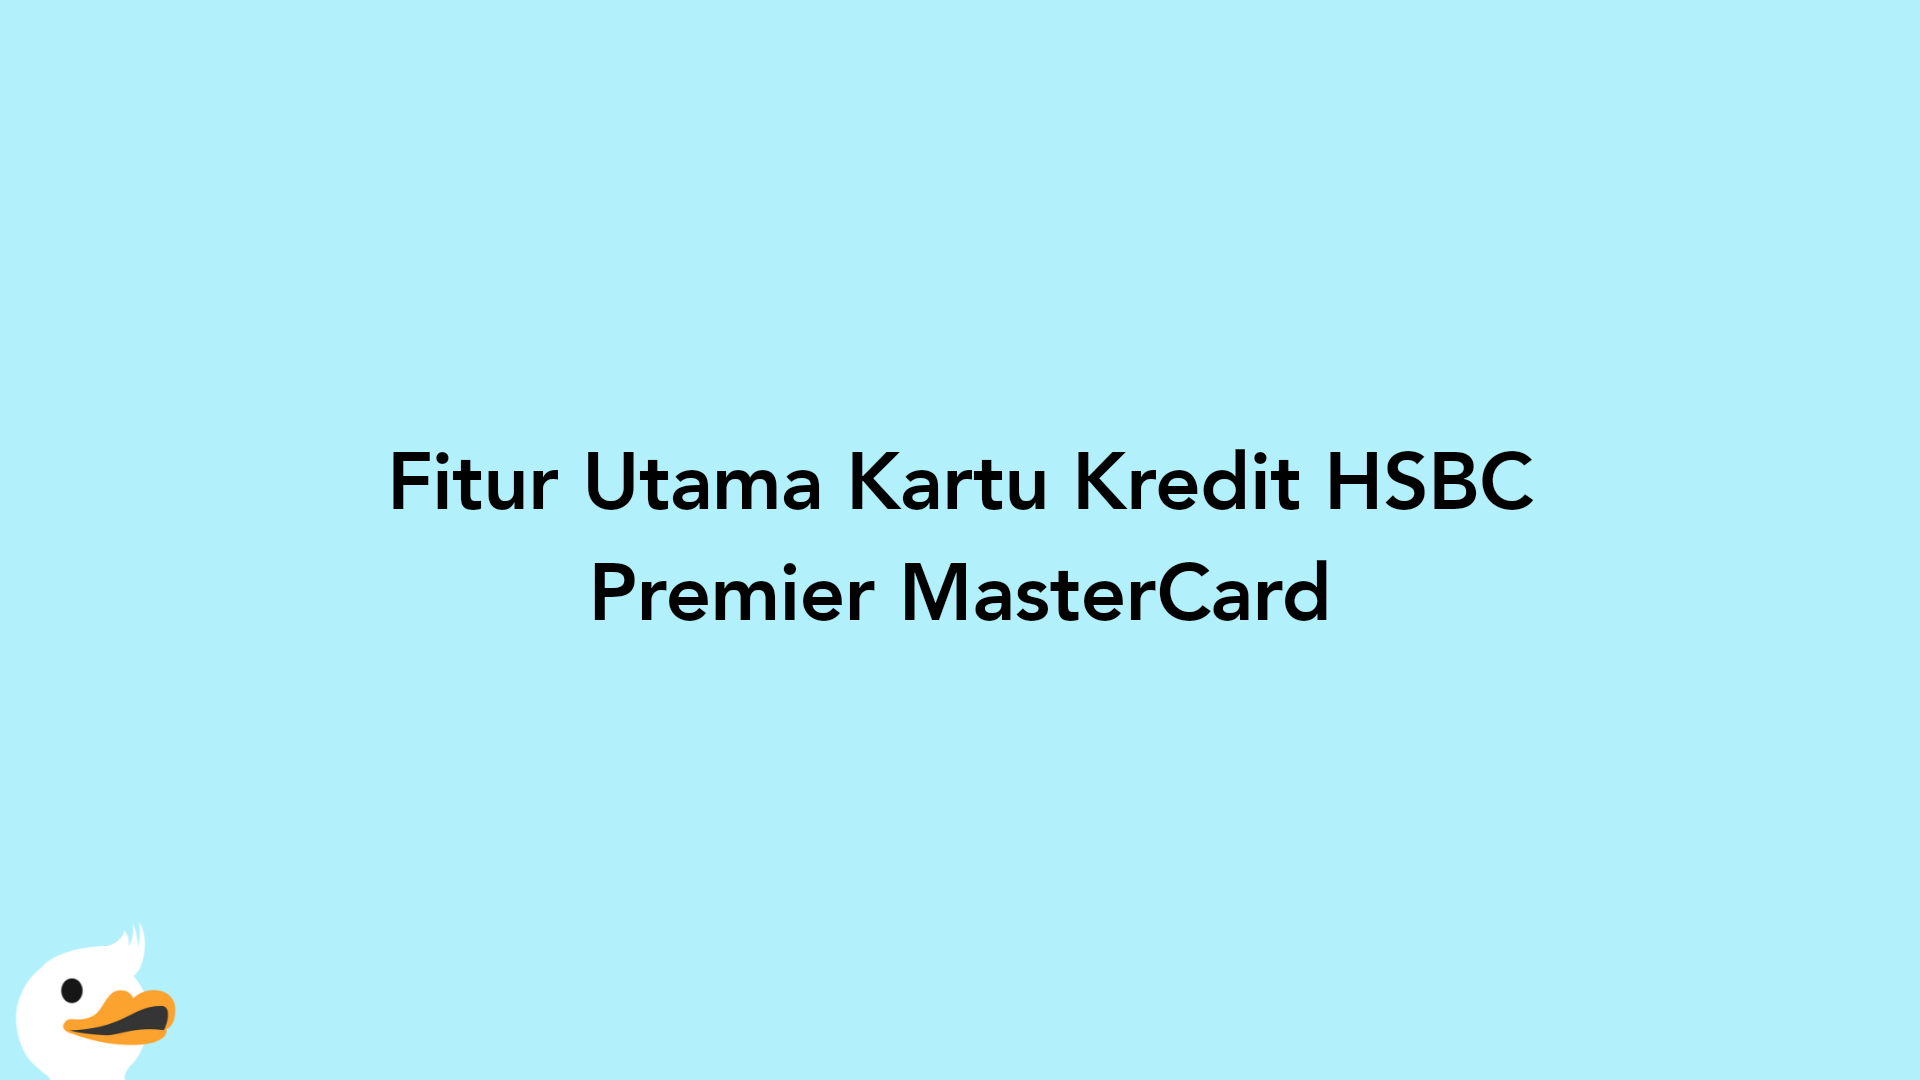 Fitur Utama Kartu Kredit HSBC Premier MasterCard